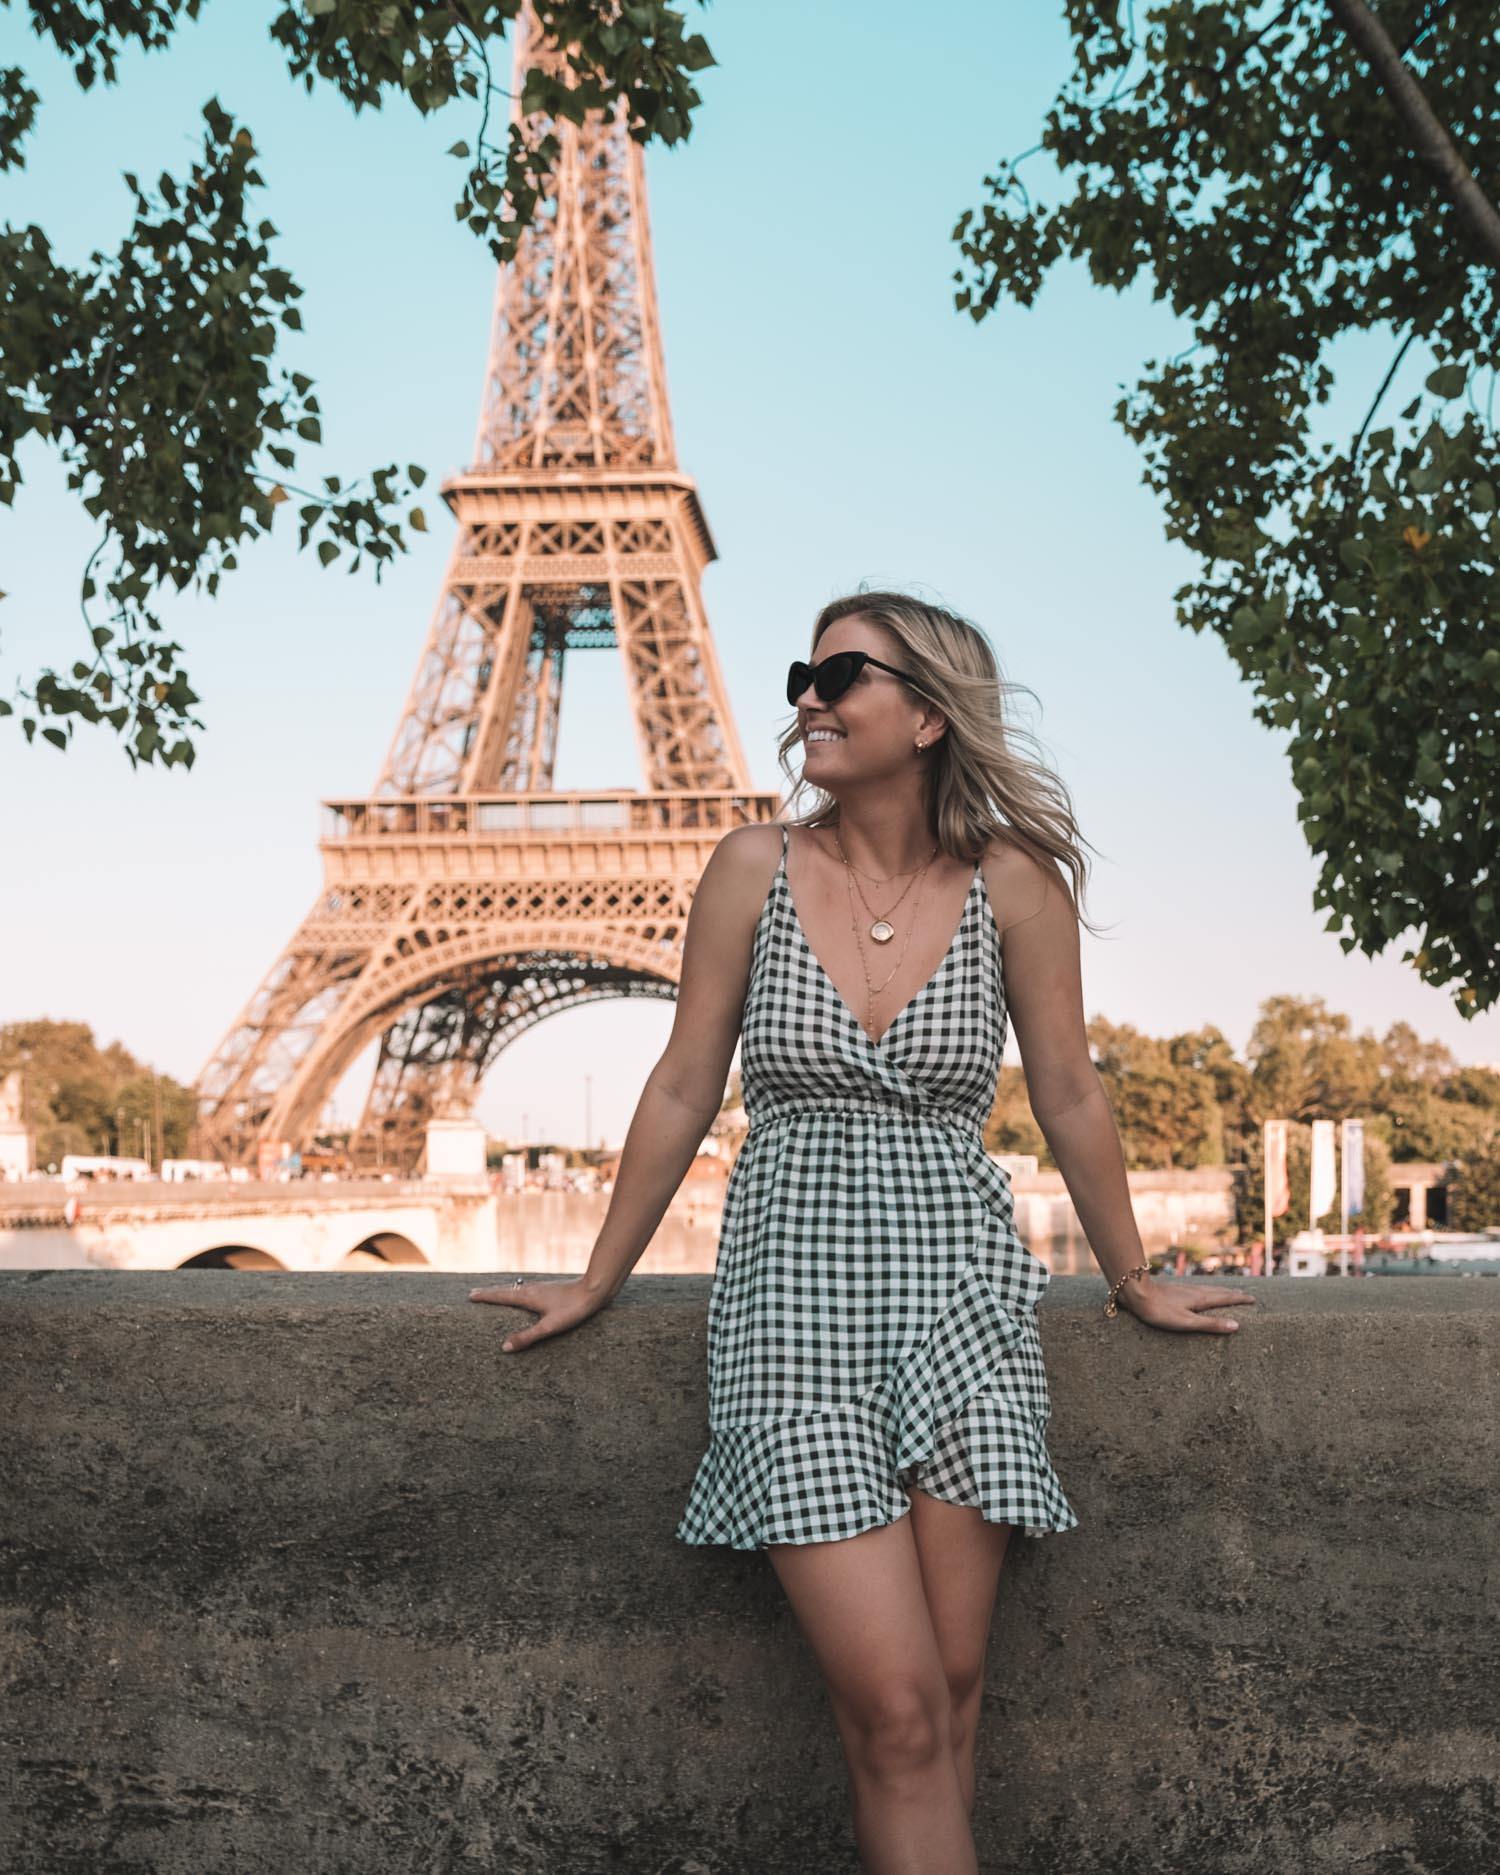 Blonde in front of Eiffel Tower in Paris